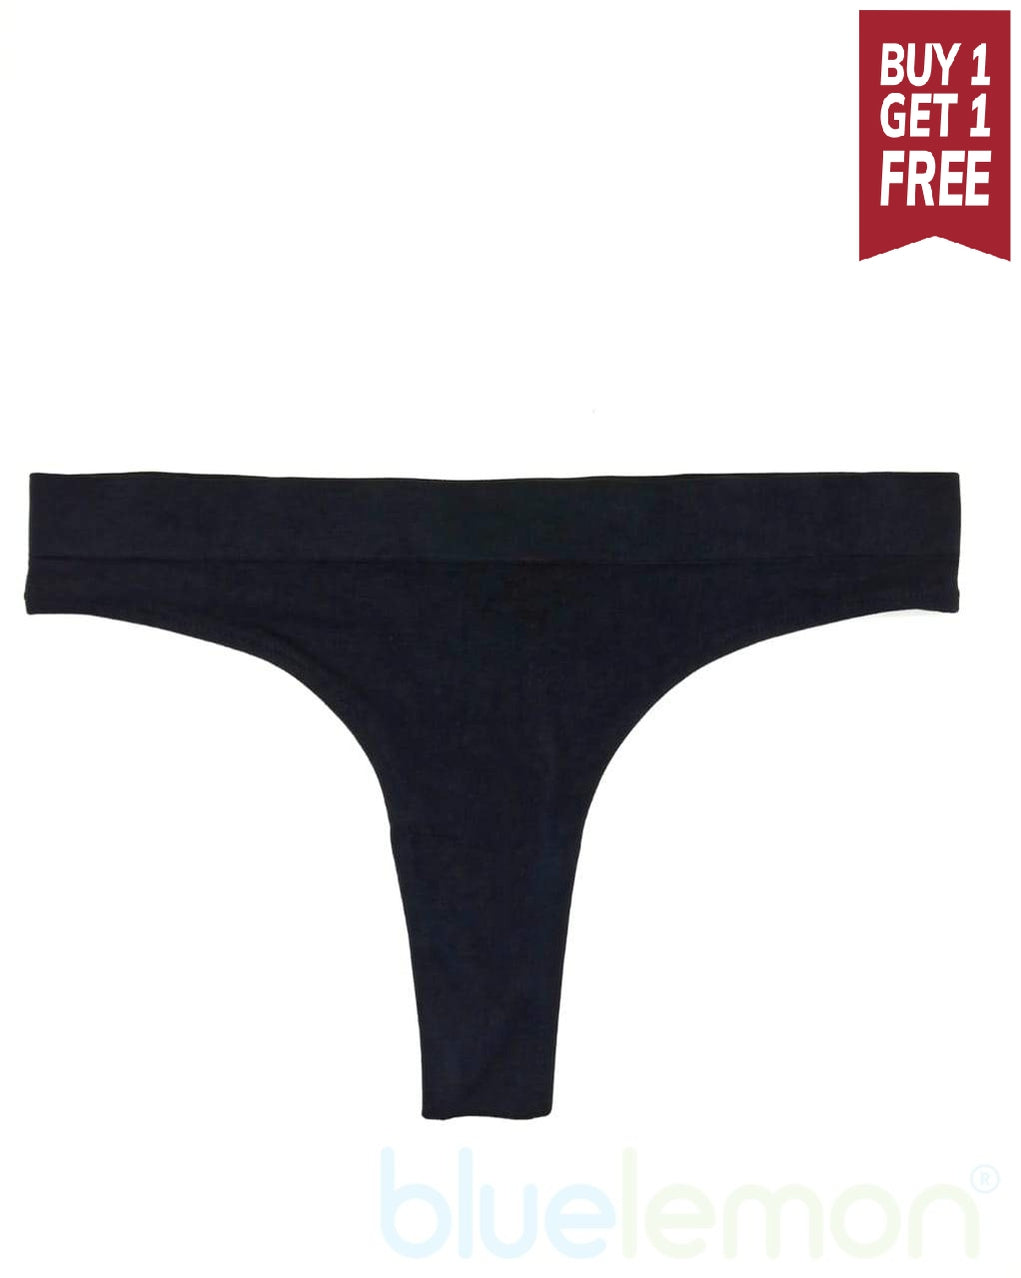 bluelemon® Yoga Panty - Microfiber Kinckers - Black